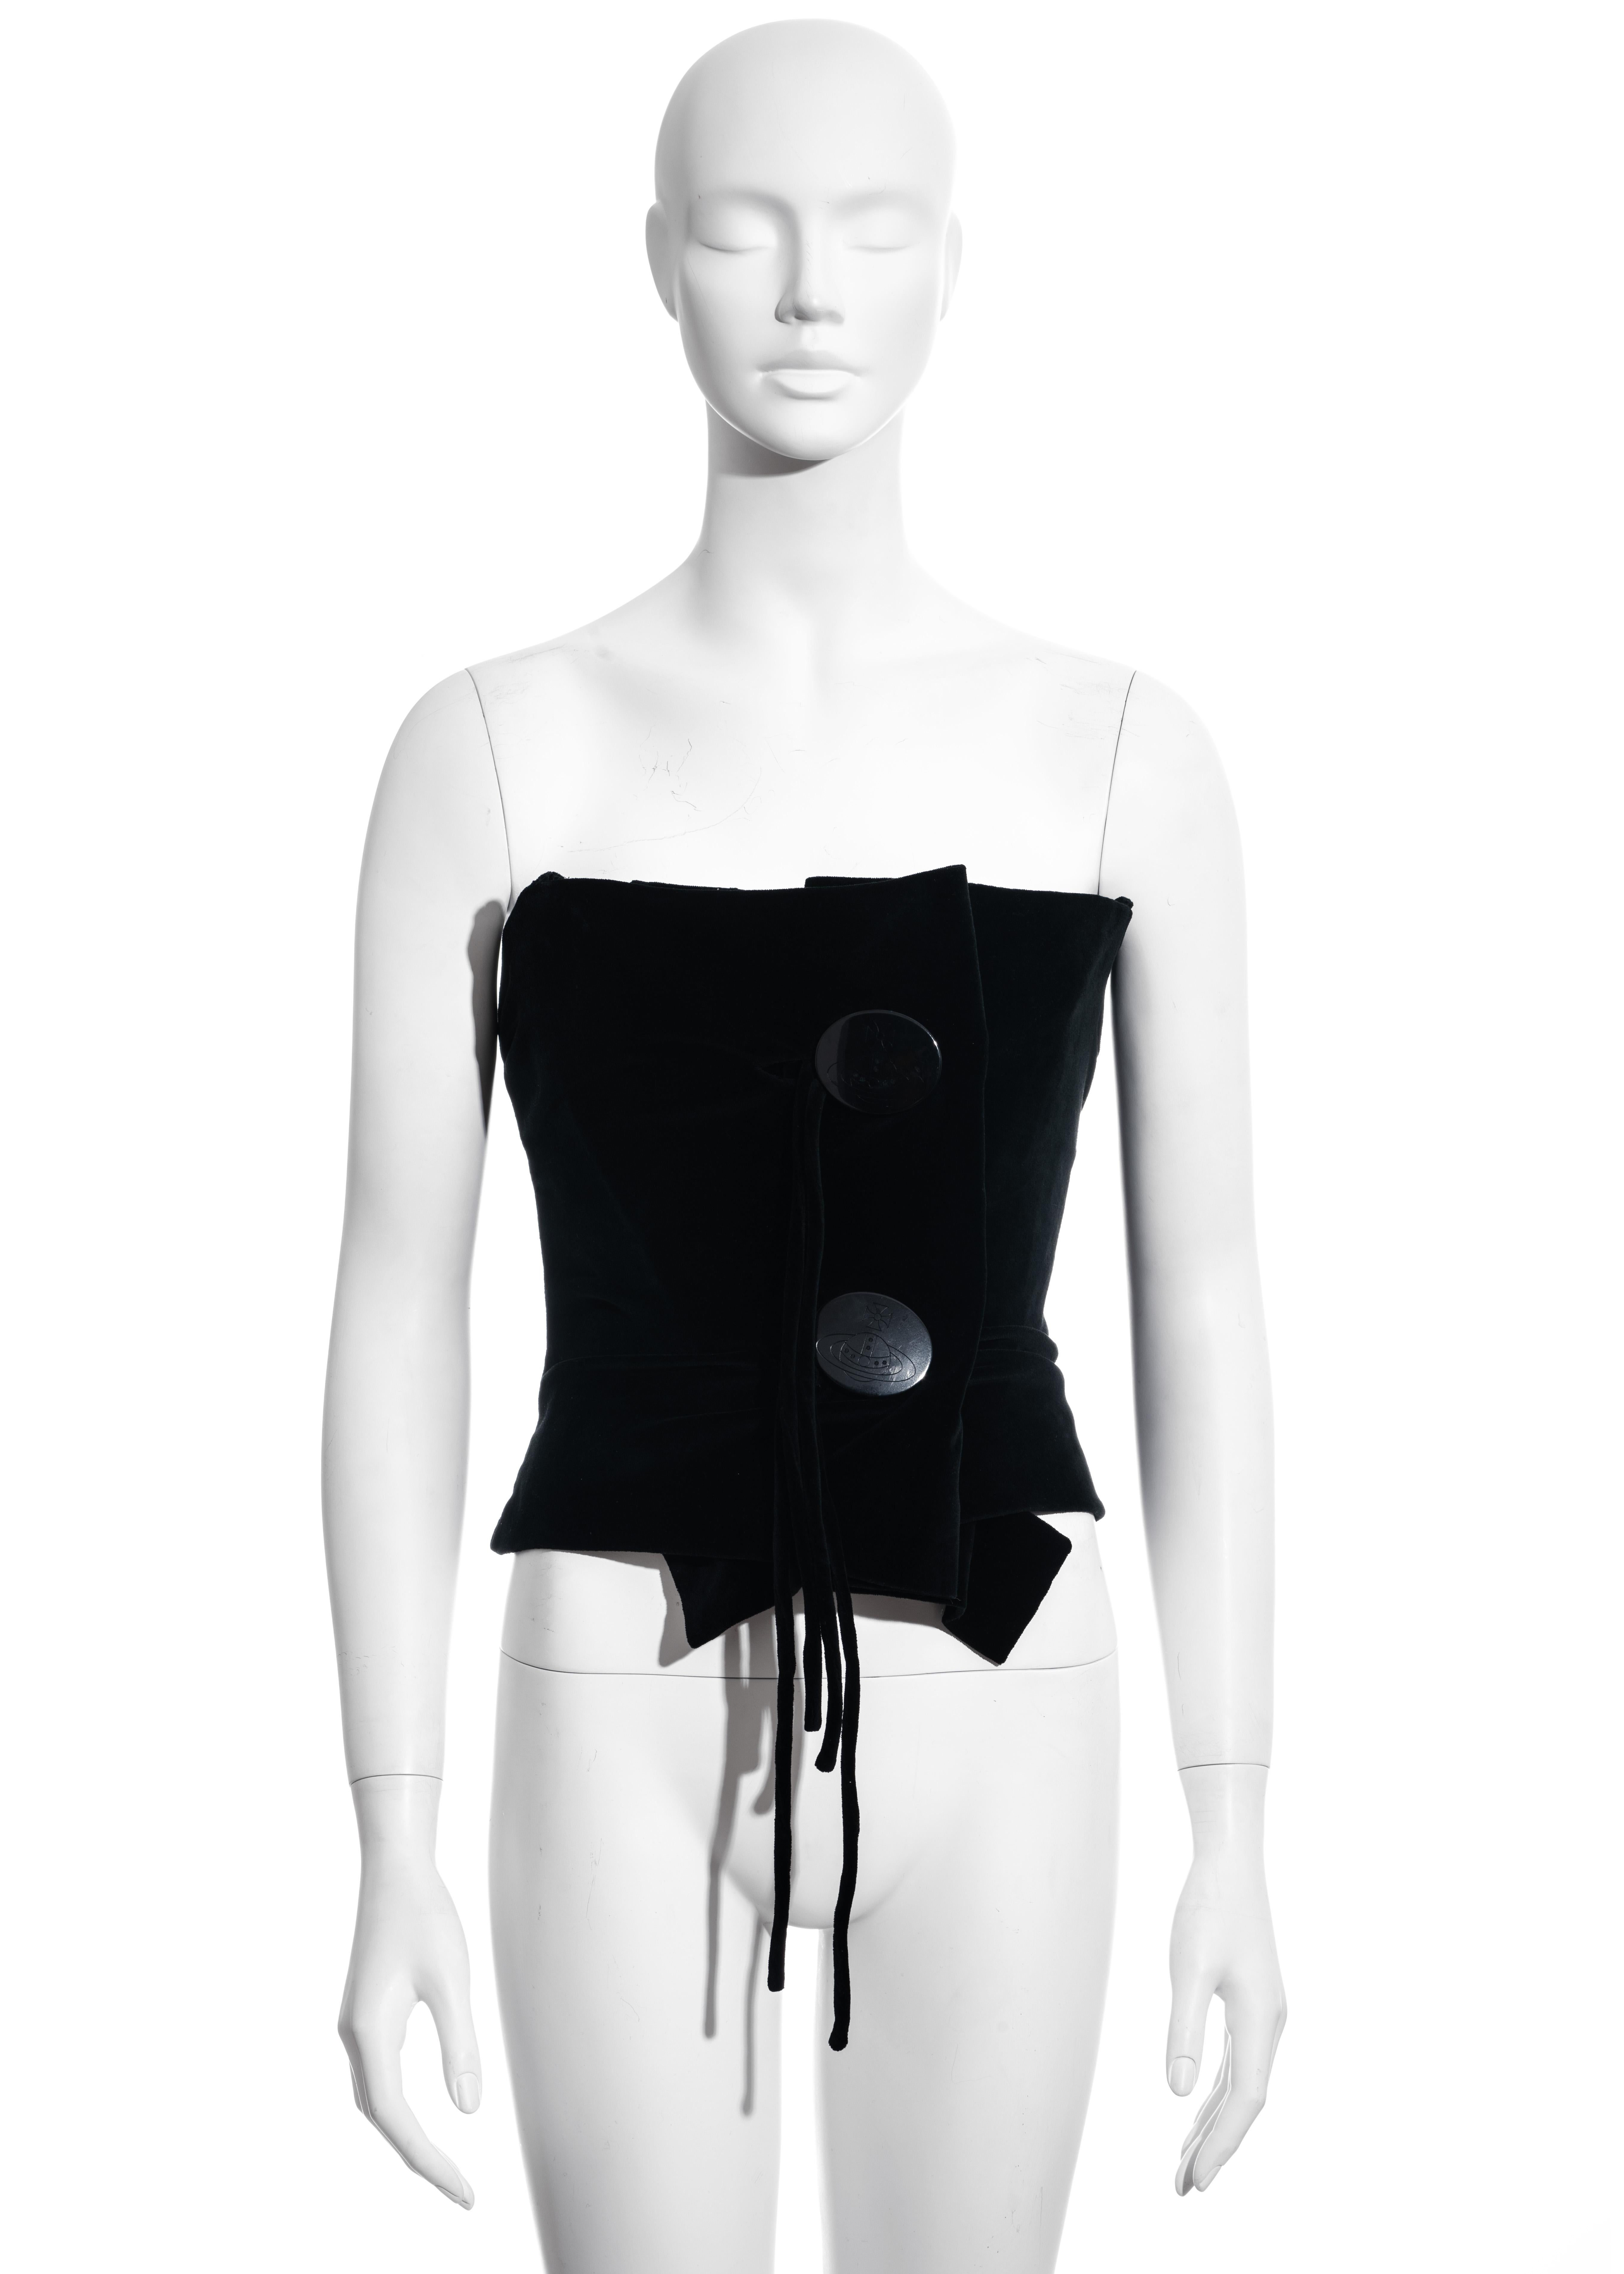 ▪ Vivienne Westwood black velvet corset 
▪ 77% Cotton, 21% Rayon, 2% Lycra
▪ Large orb buttons 
▪ Front zip closure 
▪ UK 12 - FR 40 - US 8
▪ Fall-Winter 1998